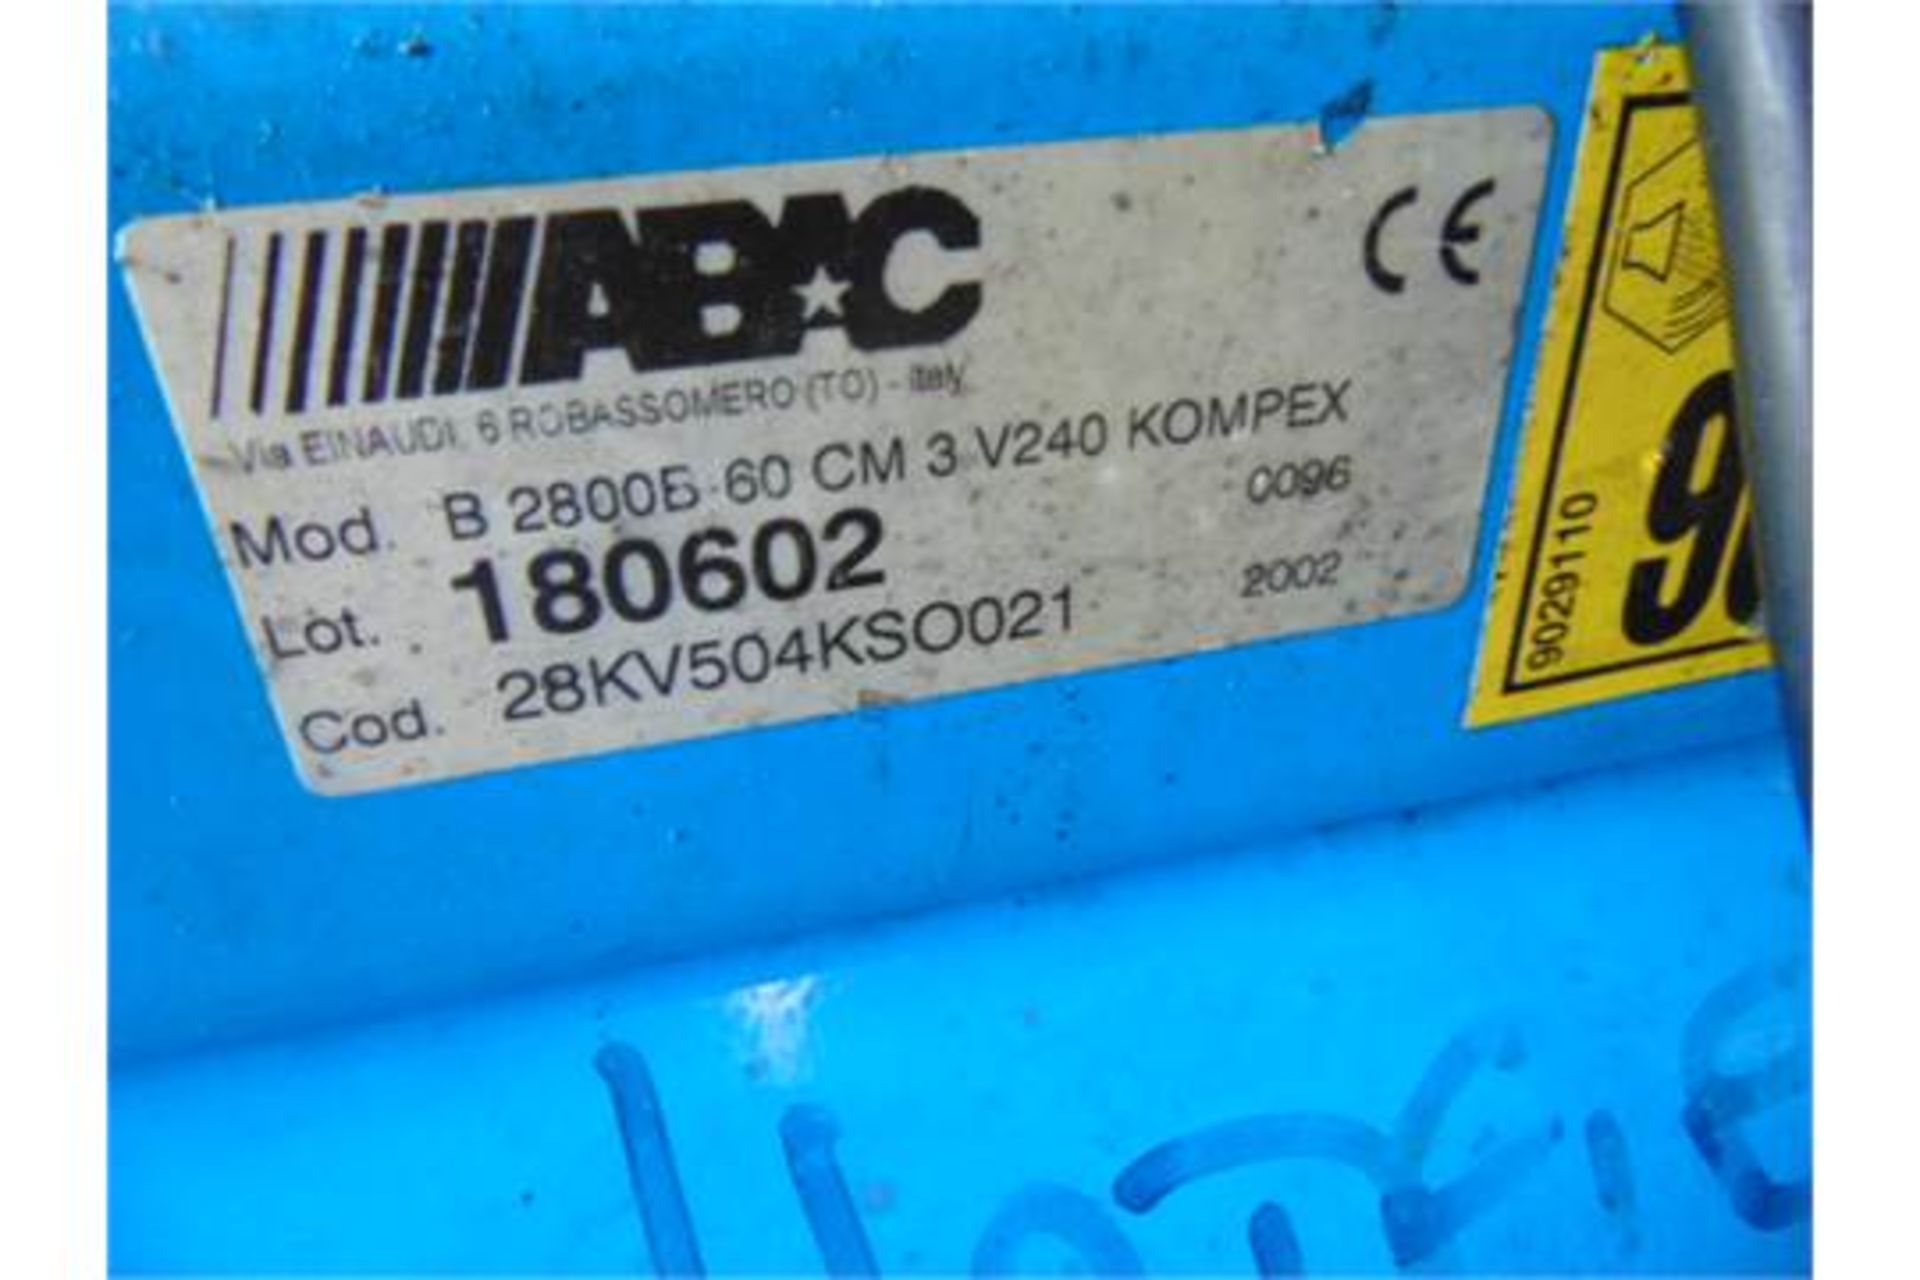 ABAC B 2800B-60 cm 3 V240 Kompex Mobile Air Compressor - Image 10 of 10